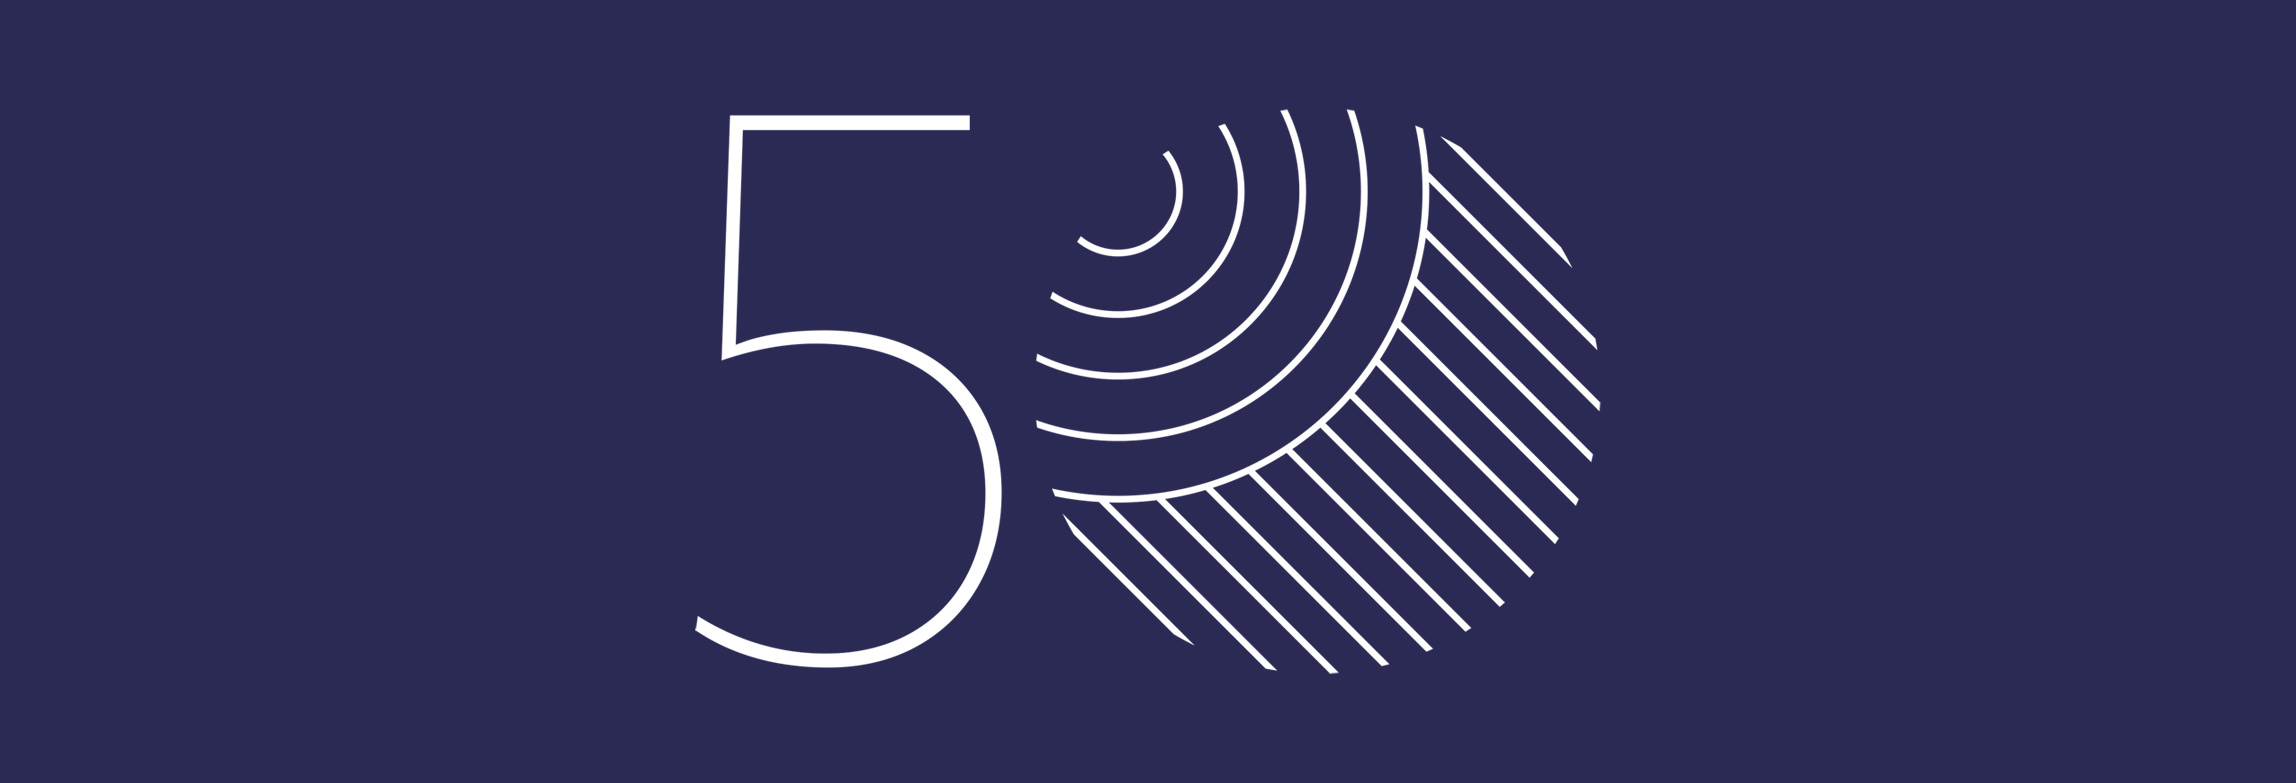 rank prize nutrition optoelectronics logos charity rebrand fiftieth anniversary logo